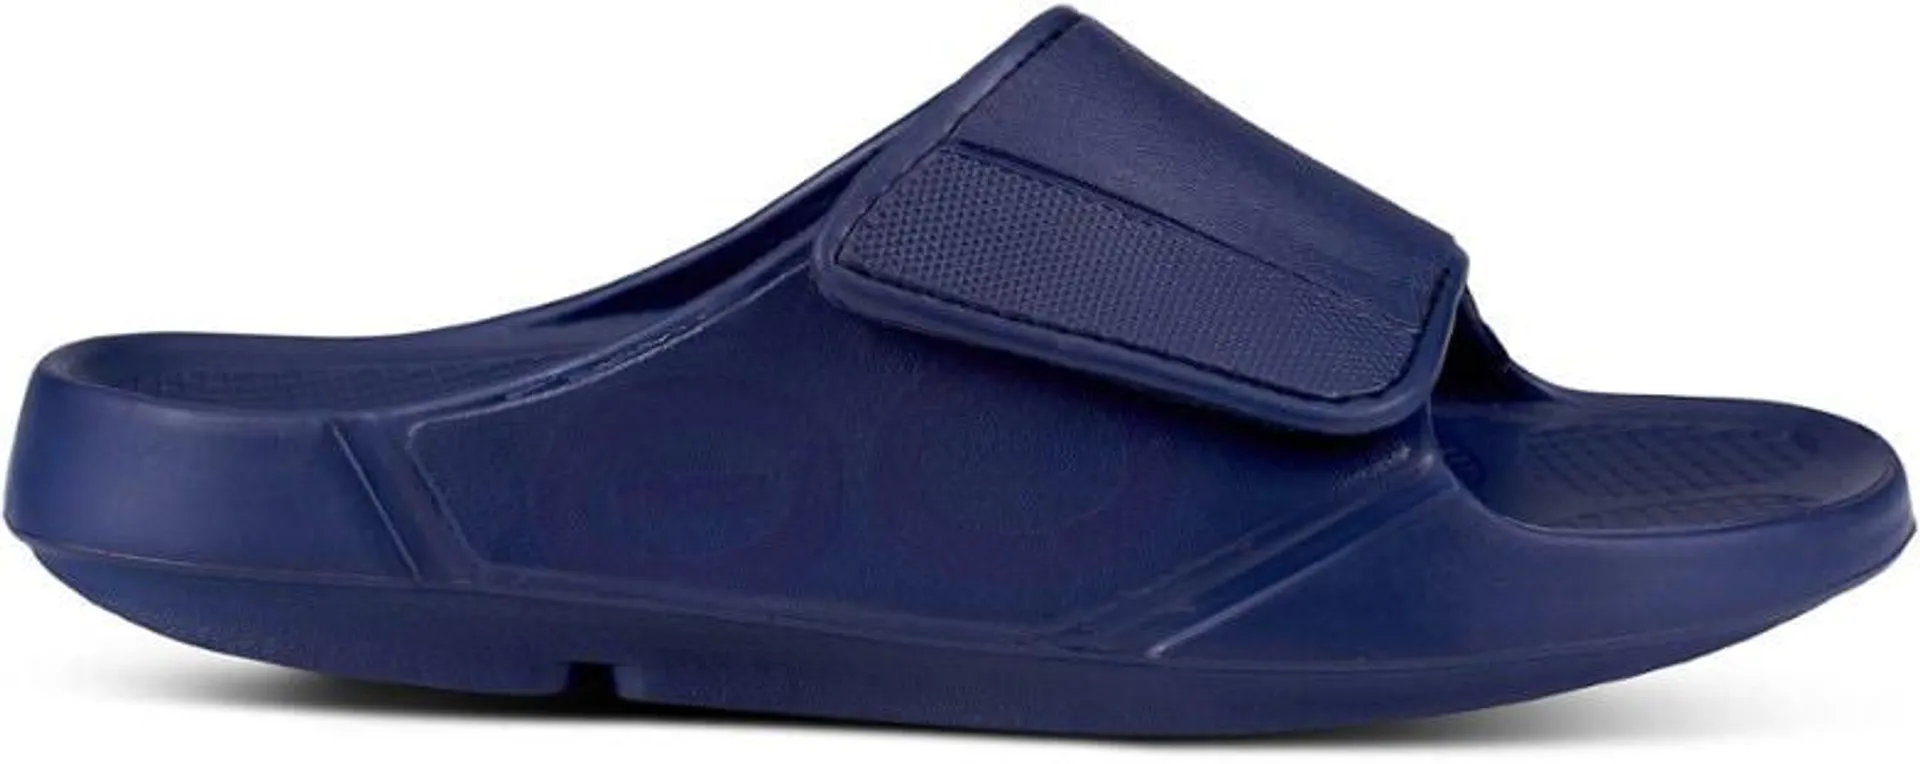 OOFOS OOahh Sport Flex Slide Sandals